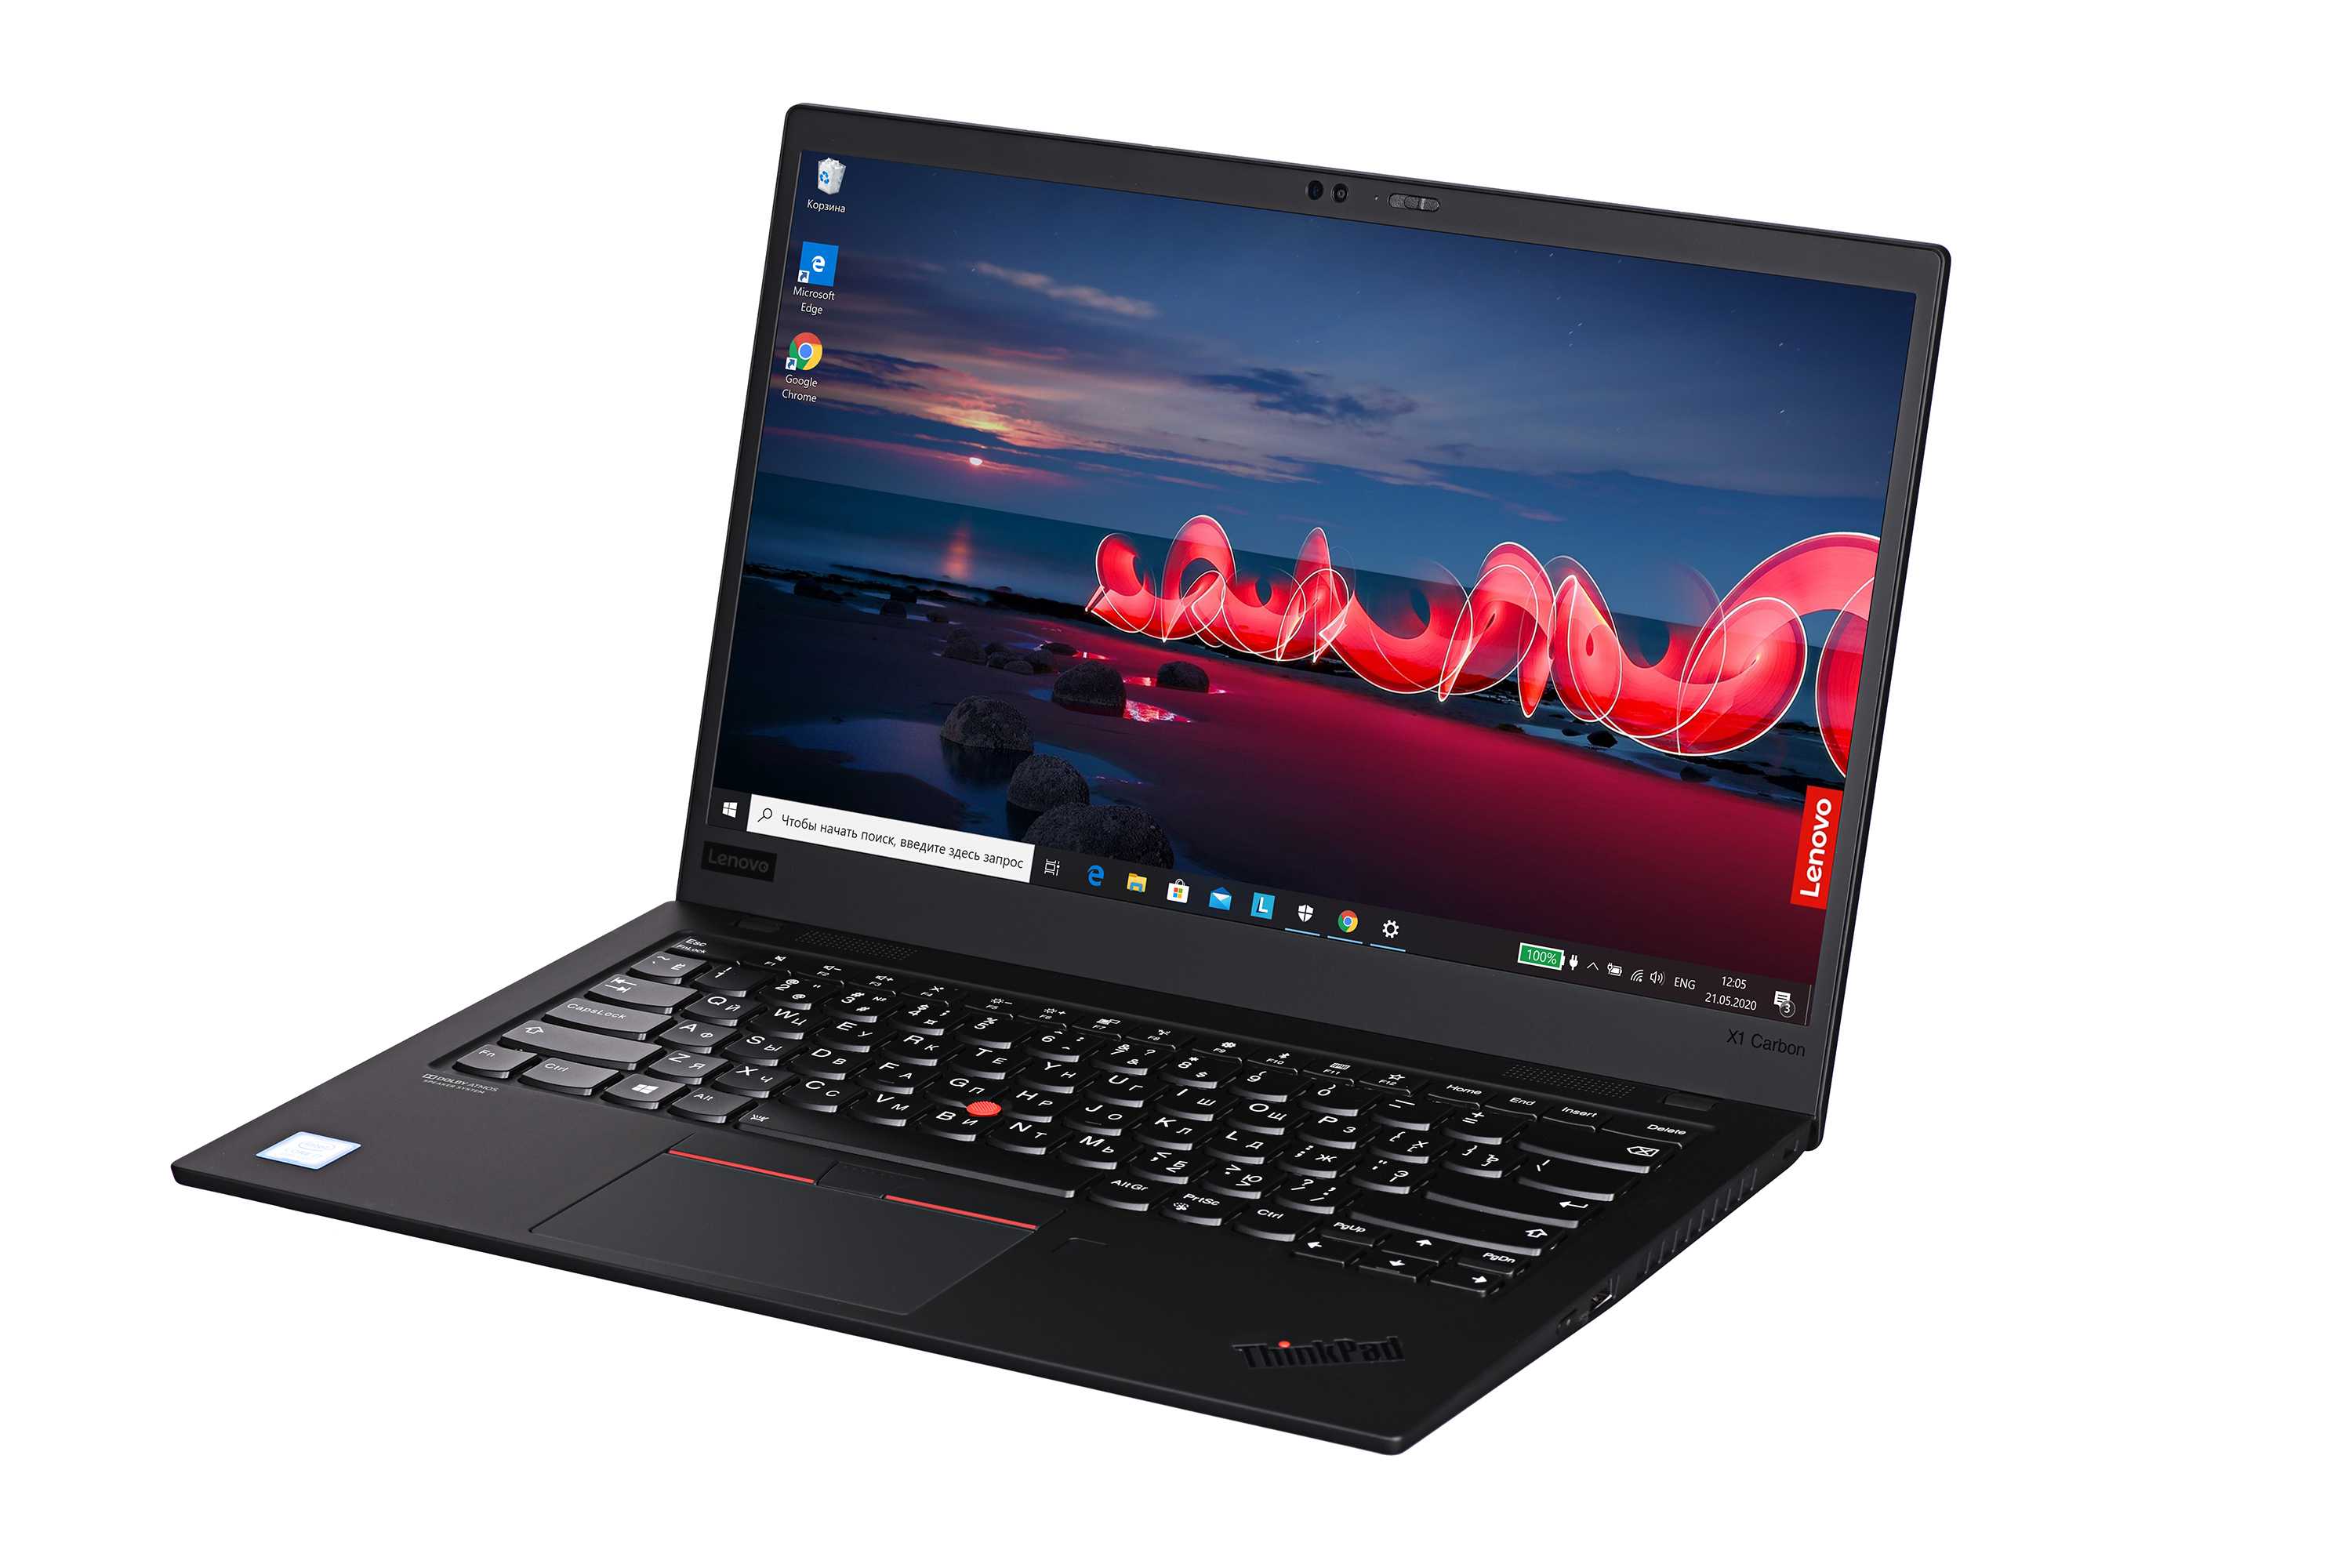 Ноутбук Lenovo ThinkPad X1 Carbon (N3KFJRT) - подробные характеристики обзоры видео фото Цены в интернет-магазинах где можно купить ноутбук Lenovo ThinkPad X1 Carbon (N3KFJRT)